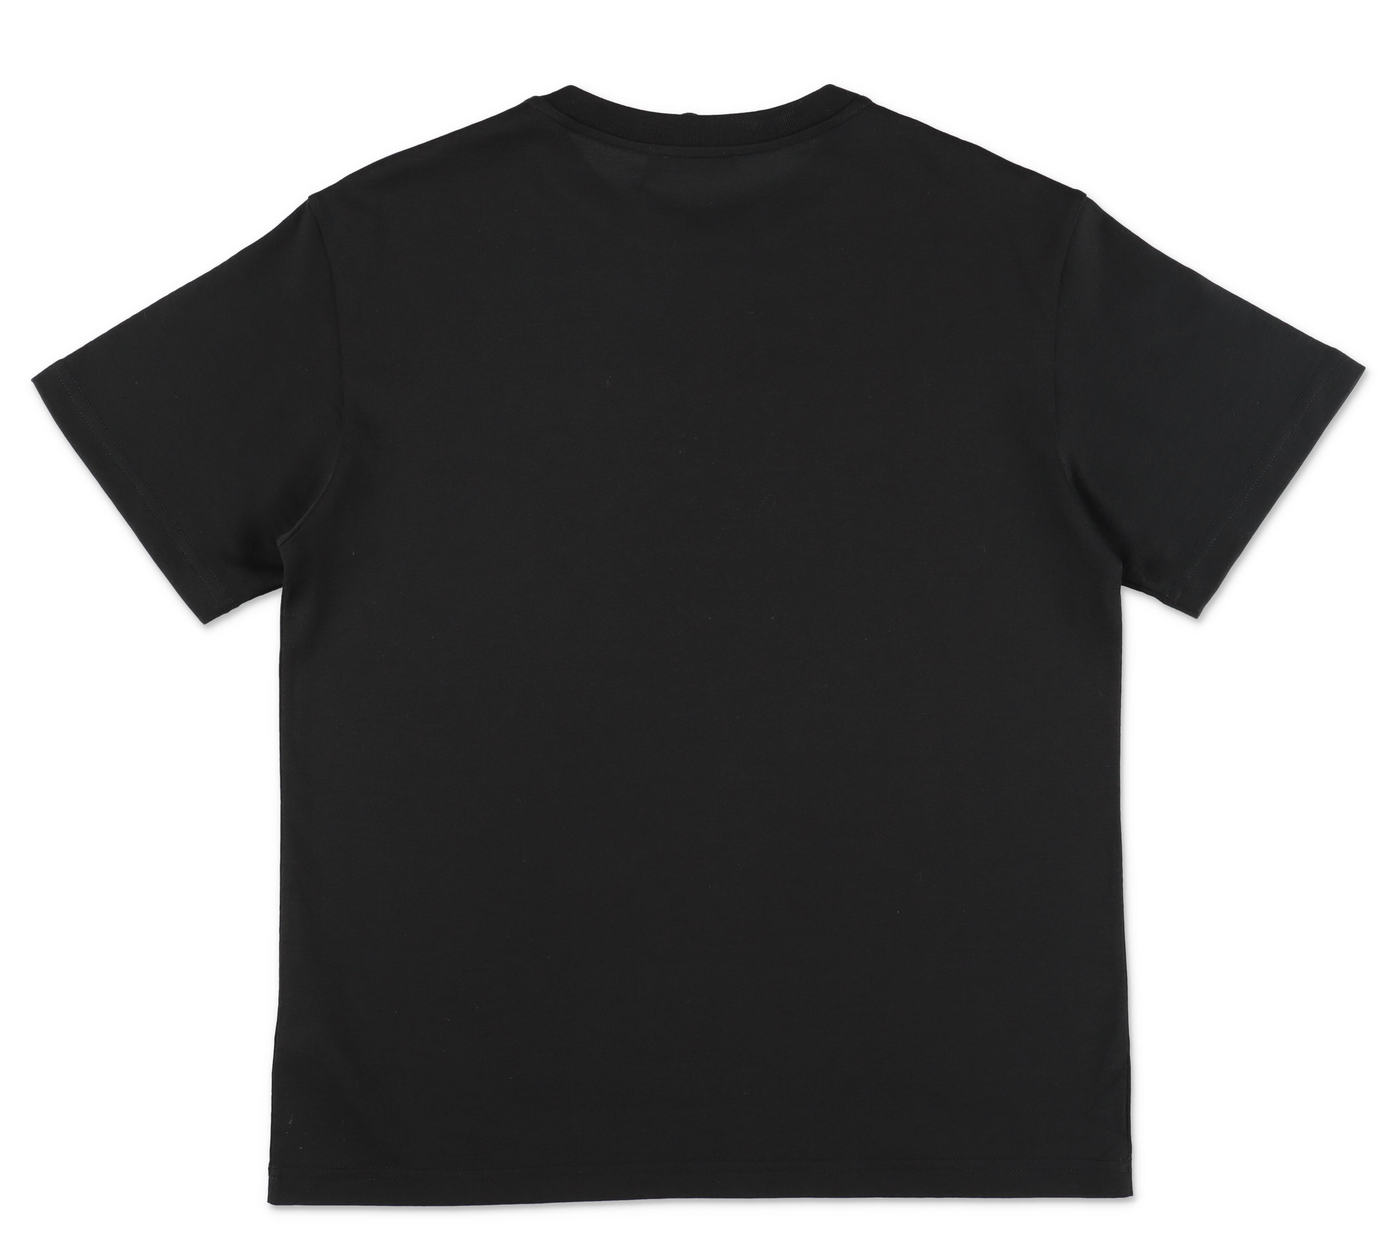 Black cotton jersey boy DOLCE & GABBANA t-shirt